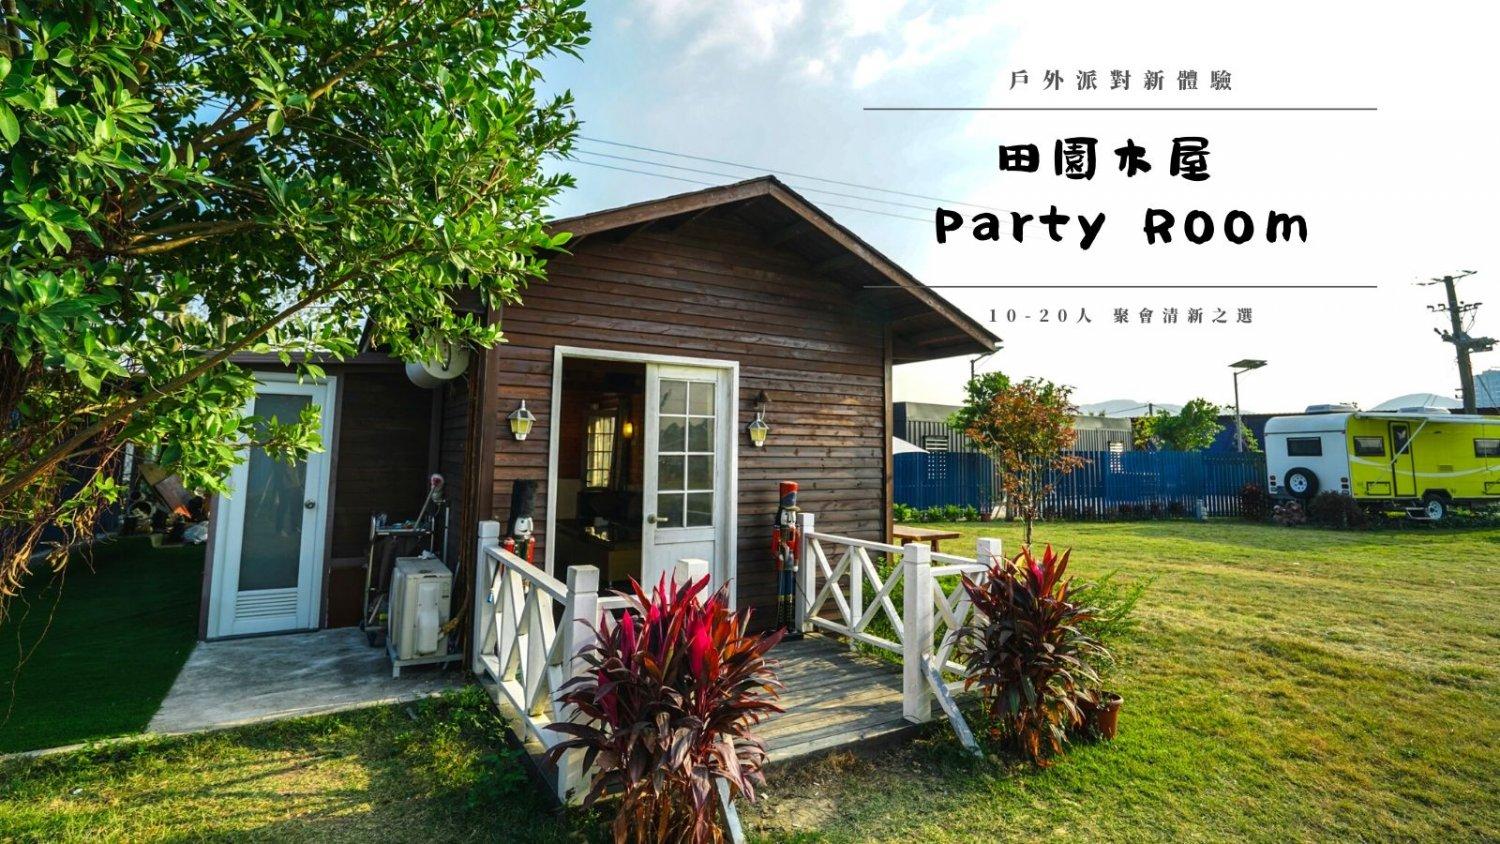 Park Nature Caravan Park Cabin Party Room 5 hour Night Time Rental (With BBQ/ Mahjong/ Karaoke) ) 1